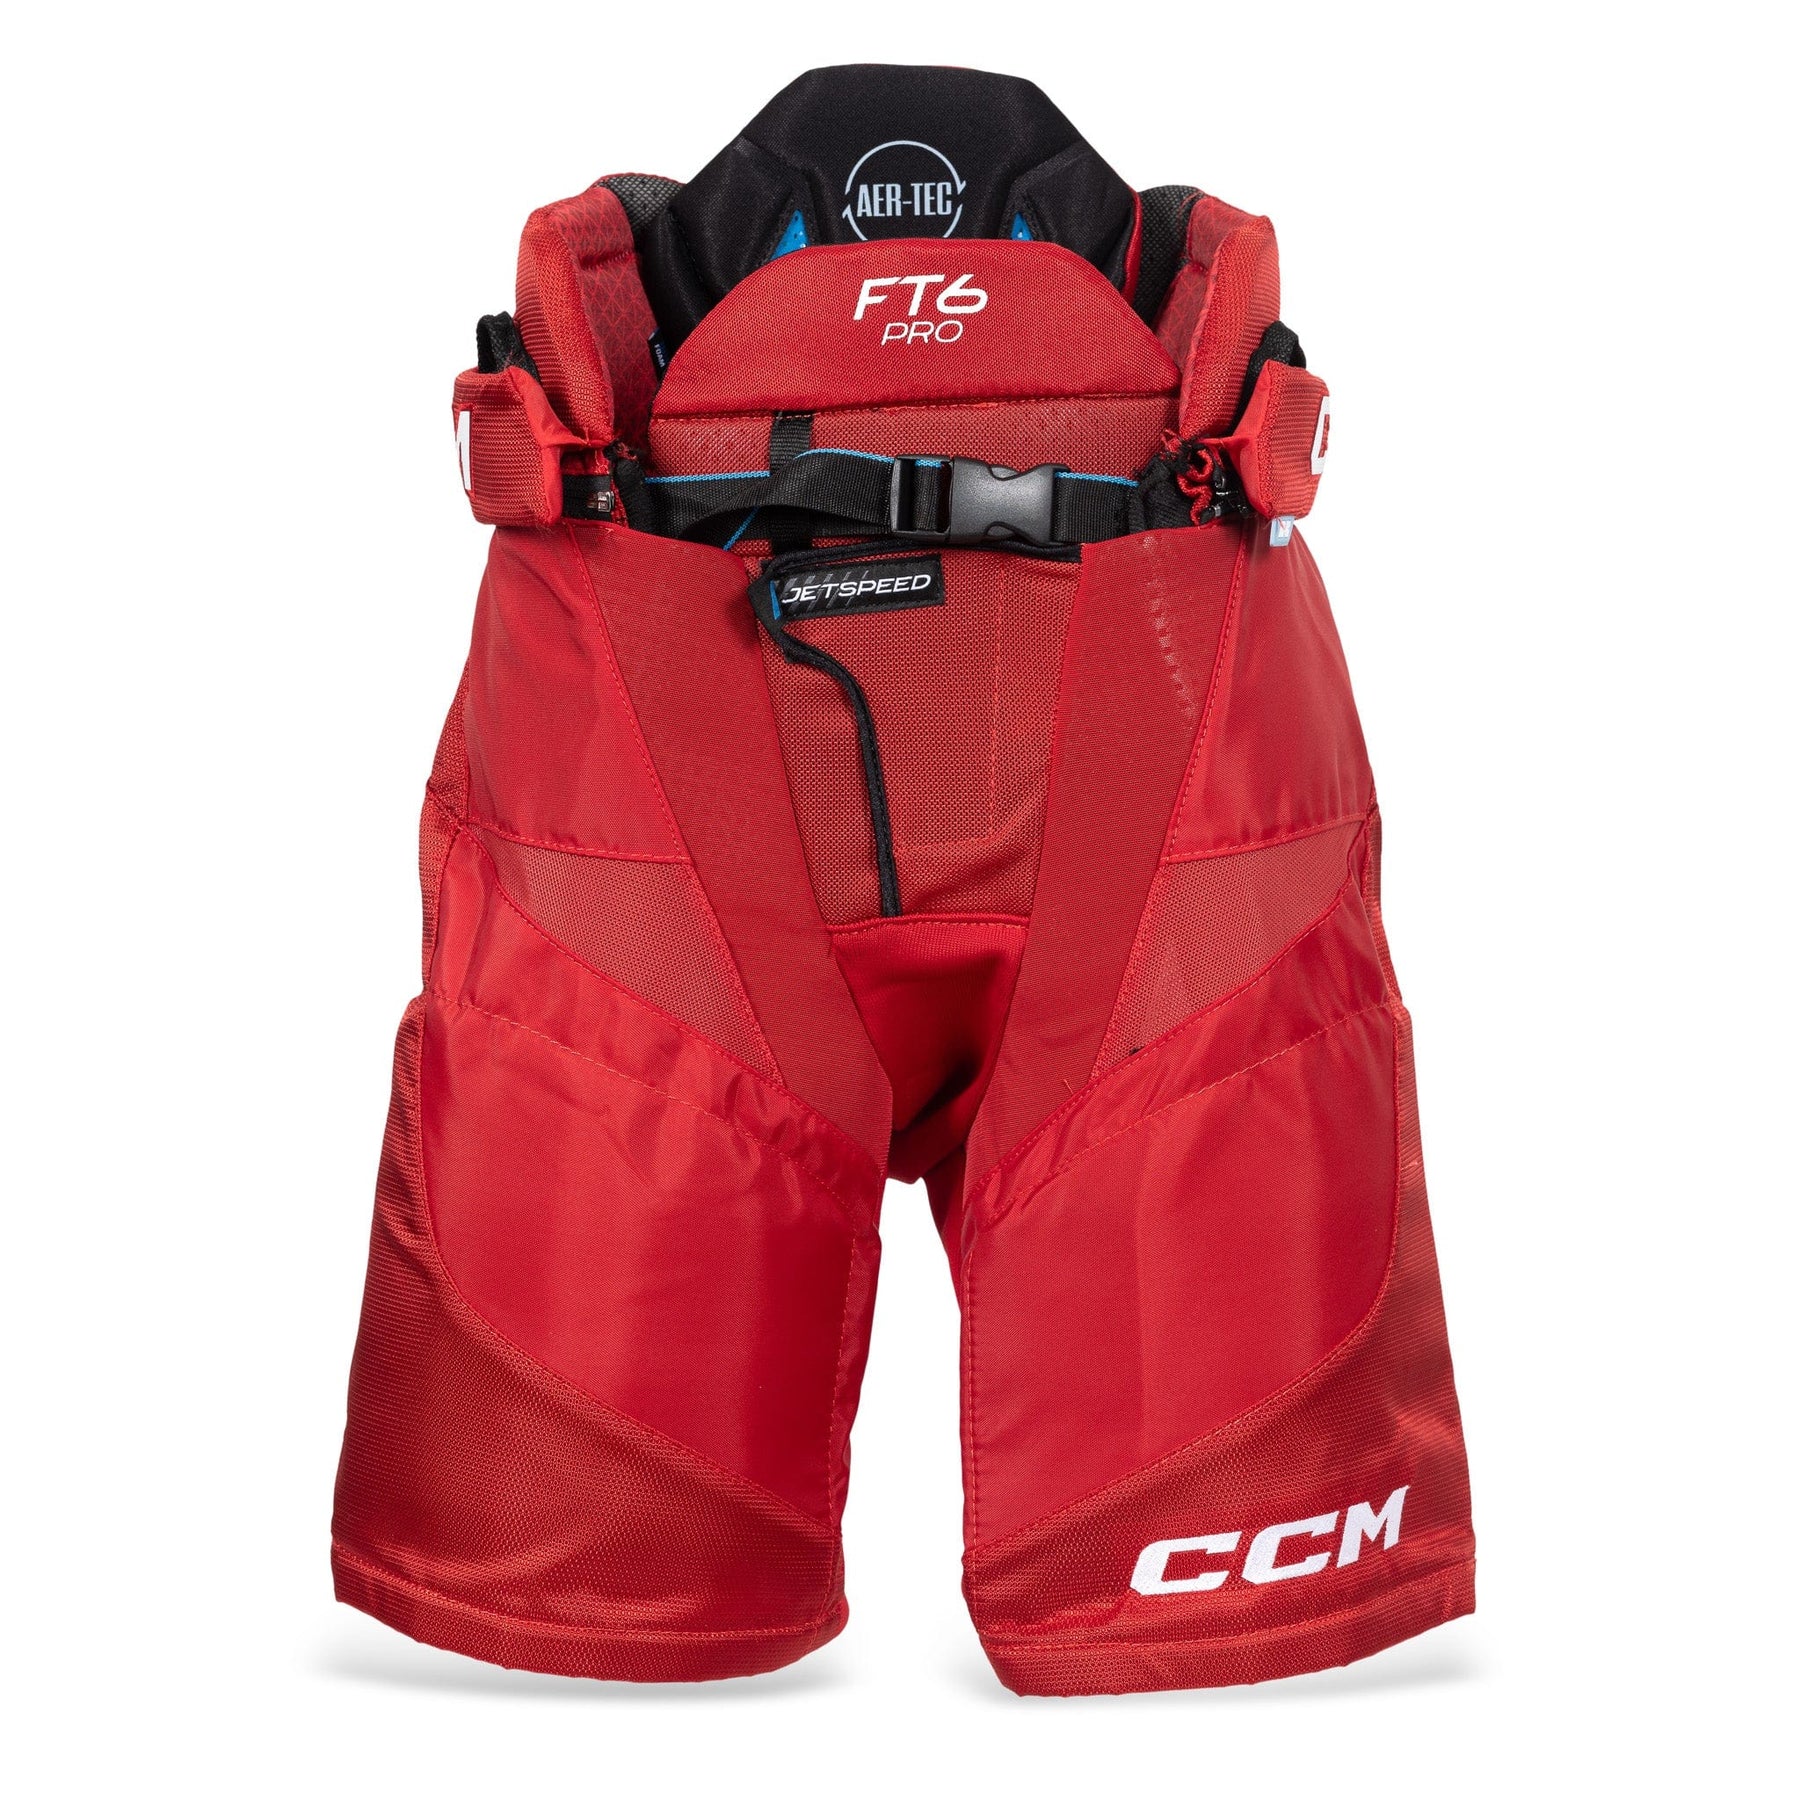 CCM Jetspeed FT6 Pro Hockey Pants - Senior